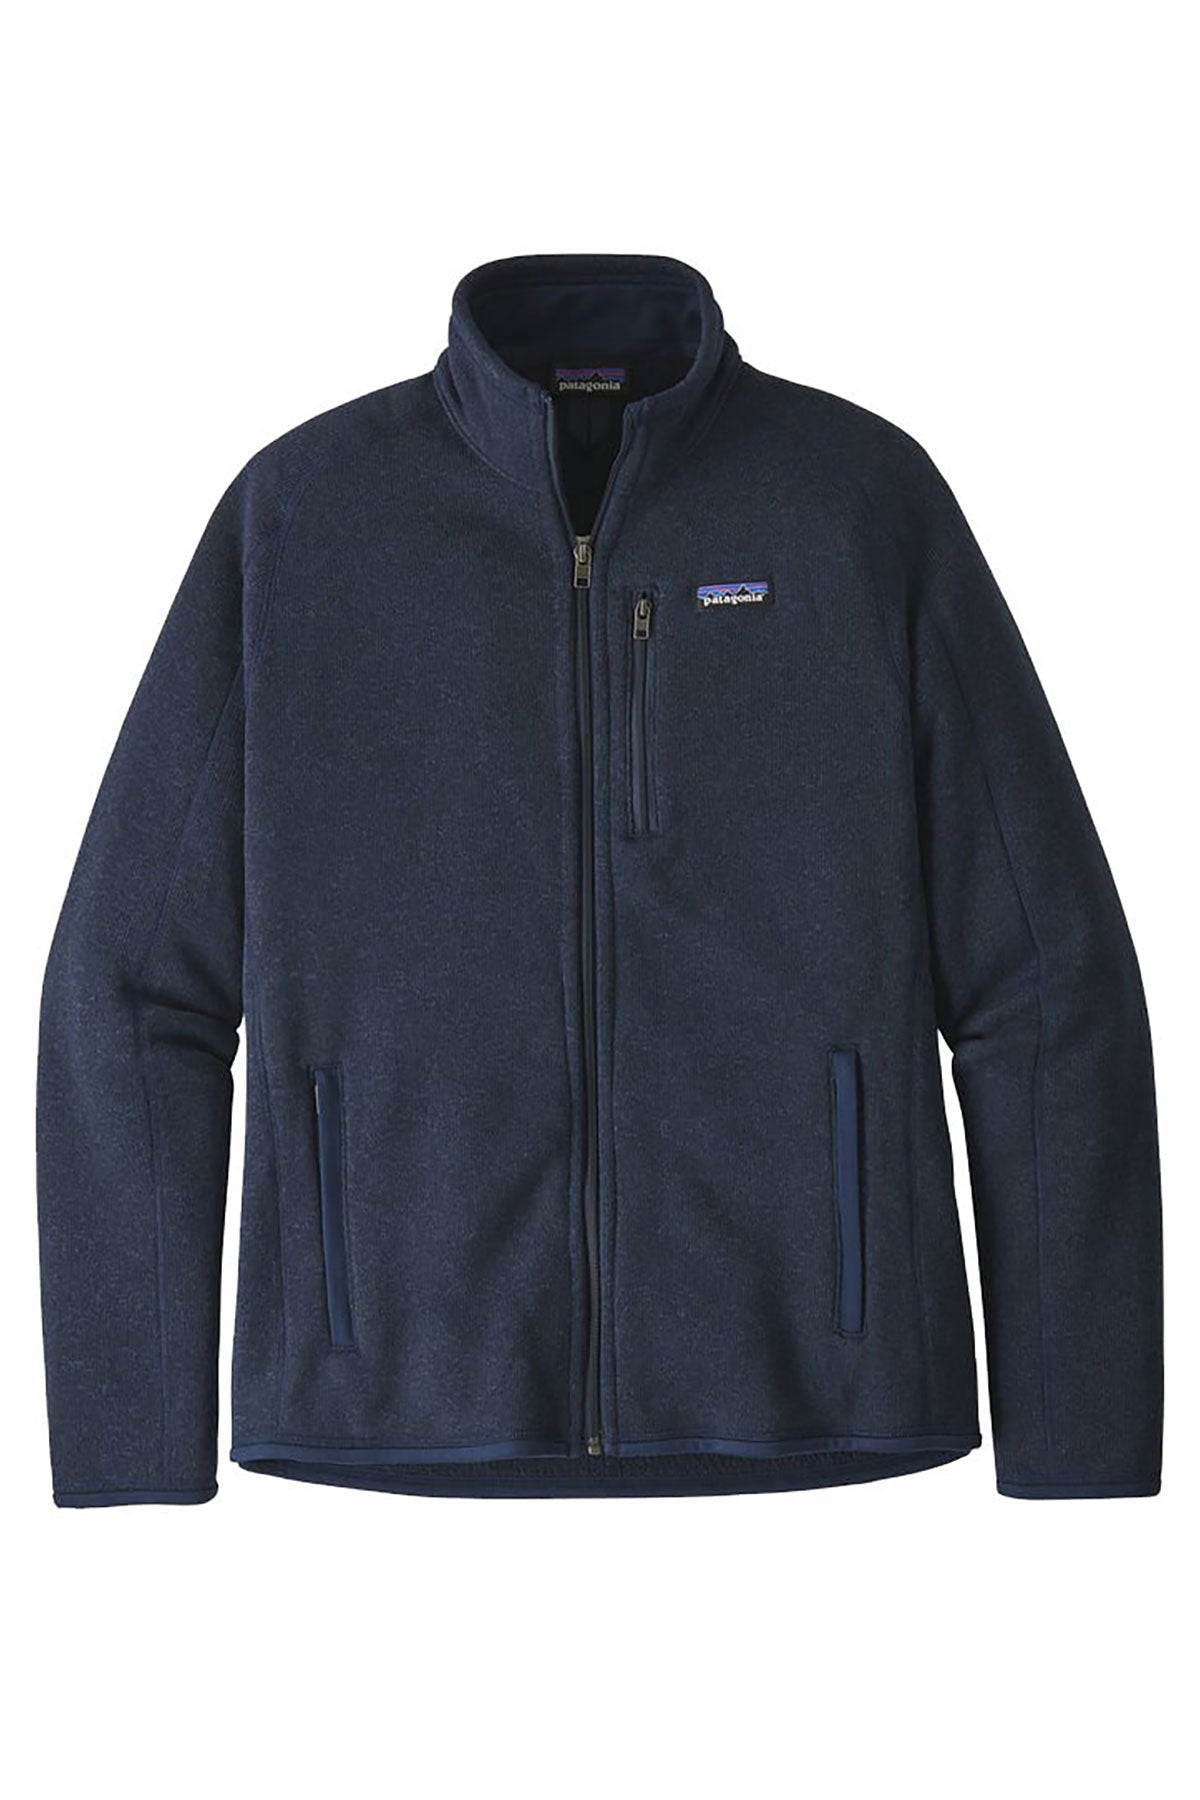 Patagonia Mens Better Sweater Custom Fleece Jackets, New Navy